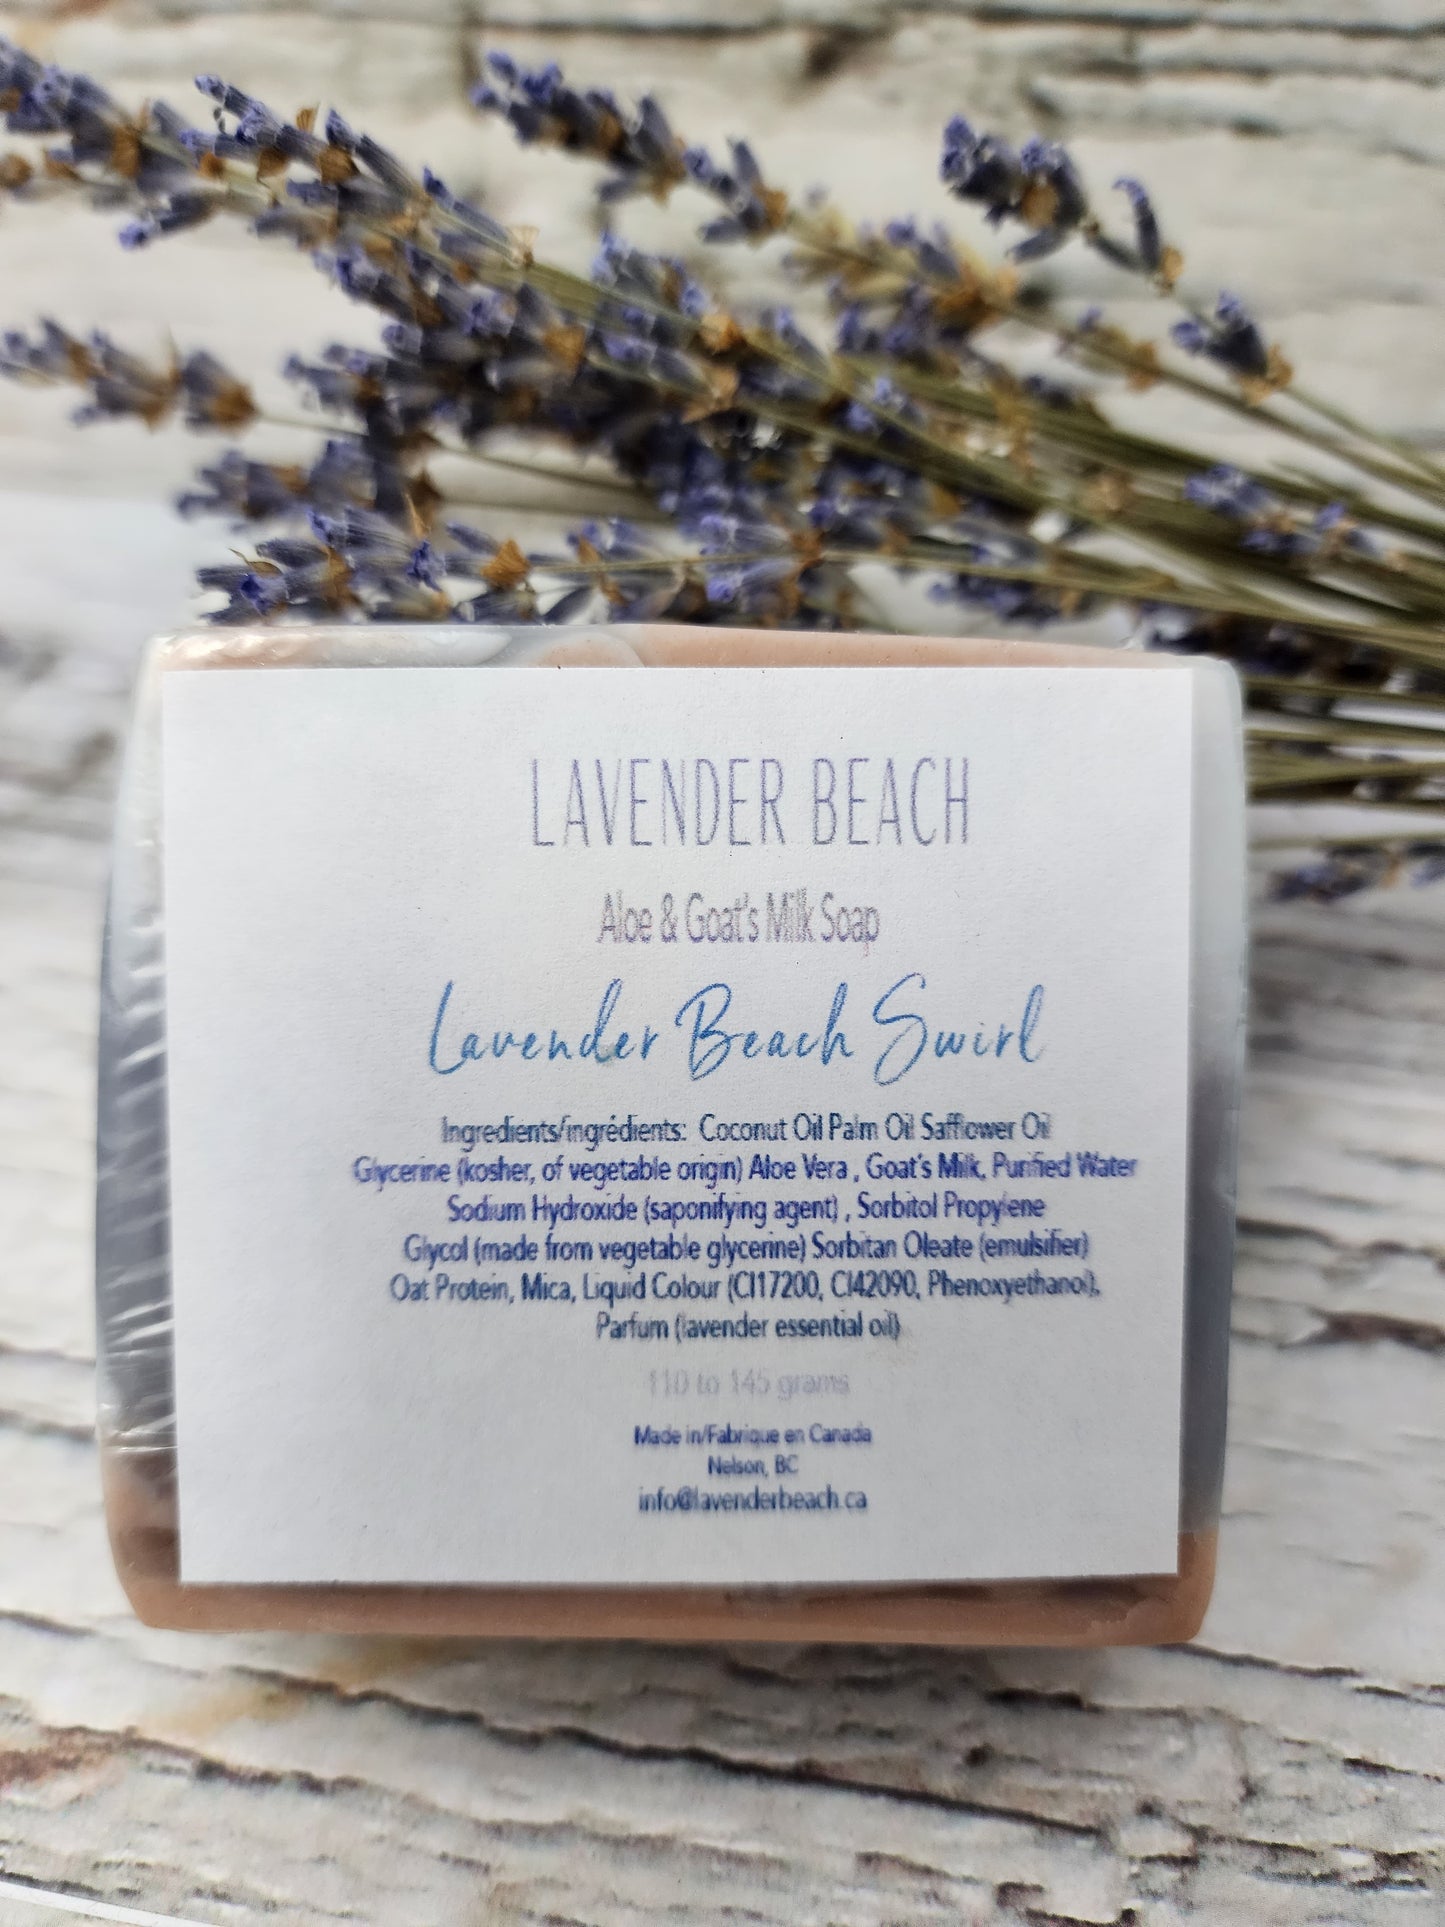 Lavender Beach Swirl Aloe & Goat's Milk Soap